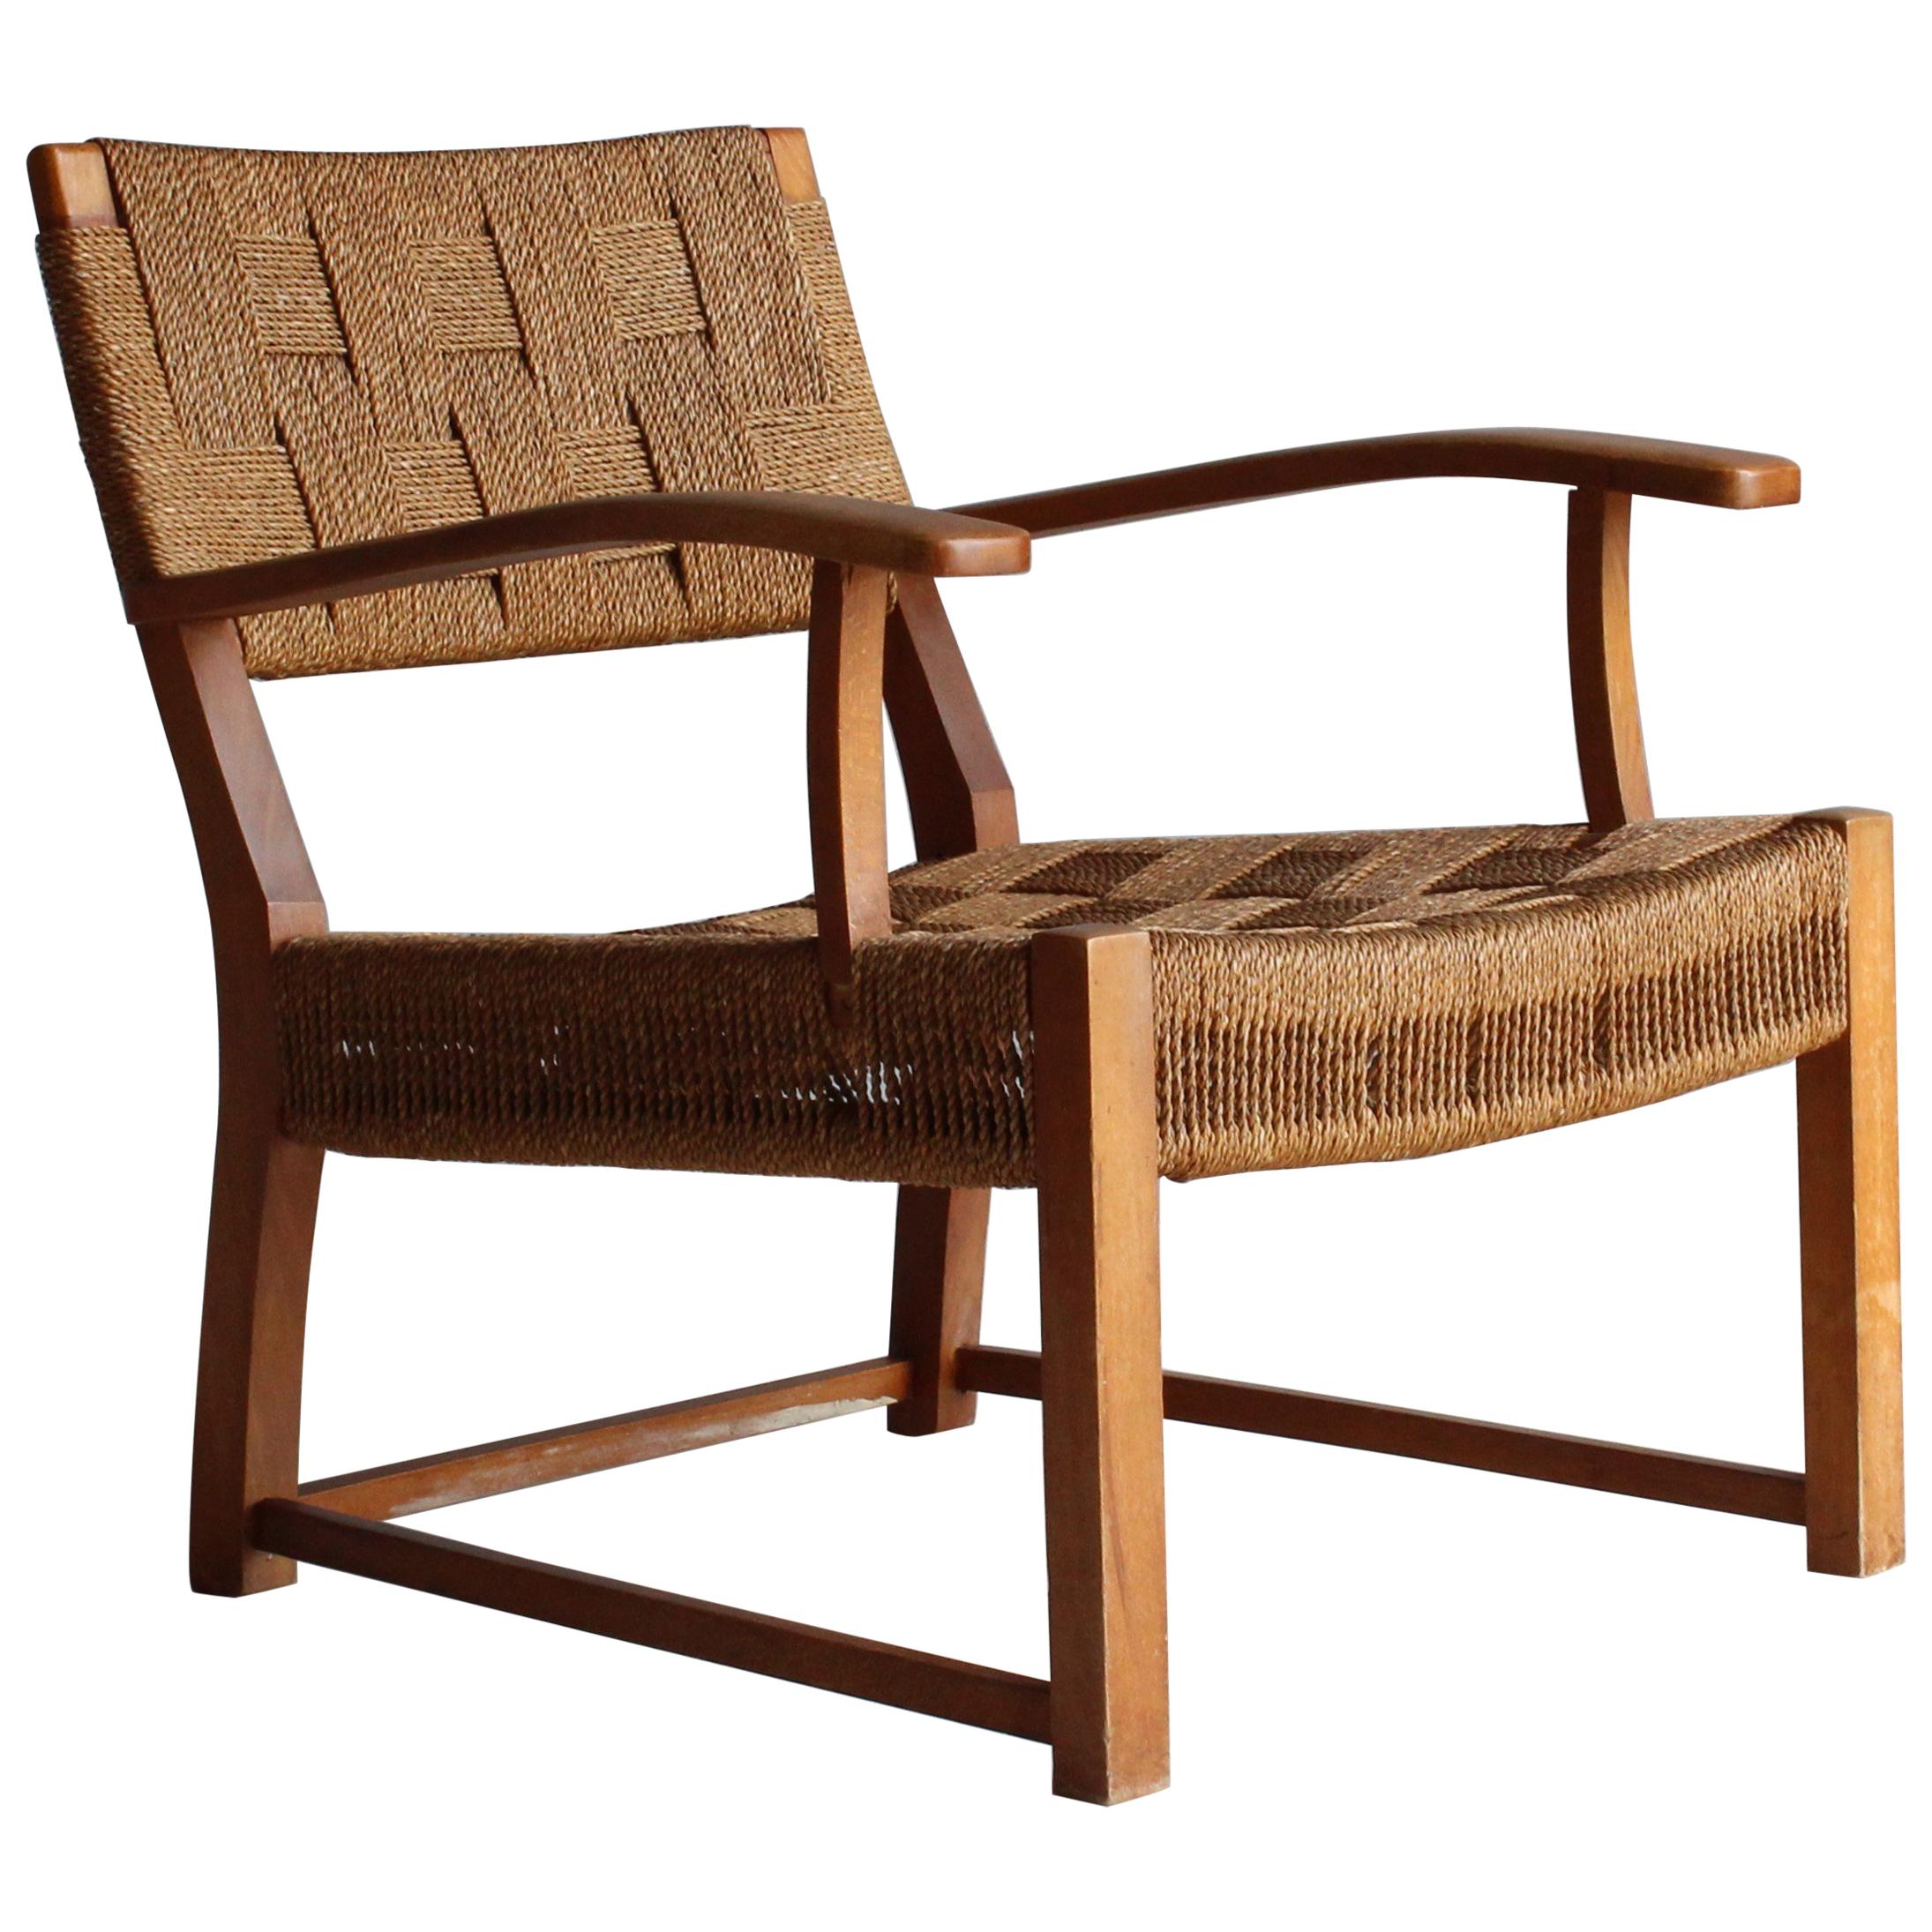 Frits Schlegel 'Attributed', Modernist Lounge Chair, Beech, Cord, Denmark, 1940s